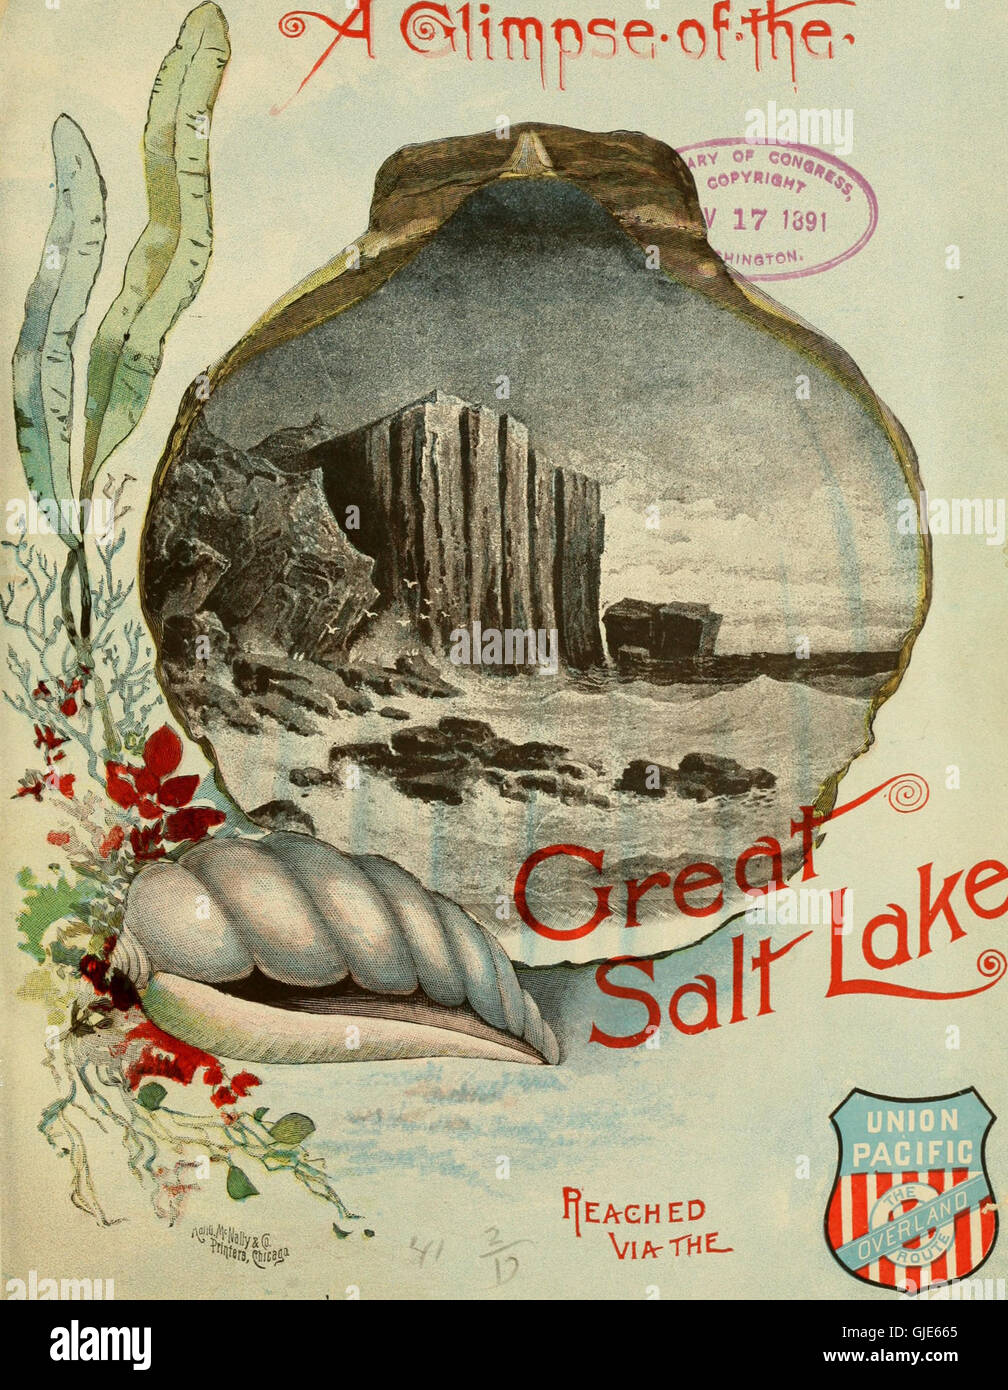 Un vistazo de Great Salt Lake, Utah (1891) Foto de stock